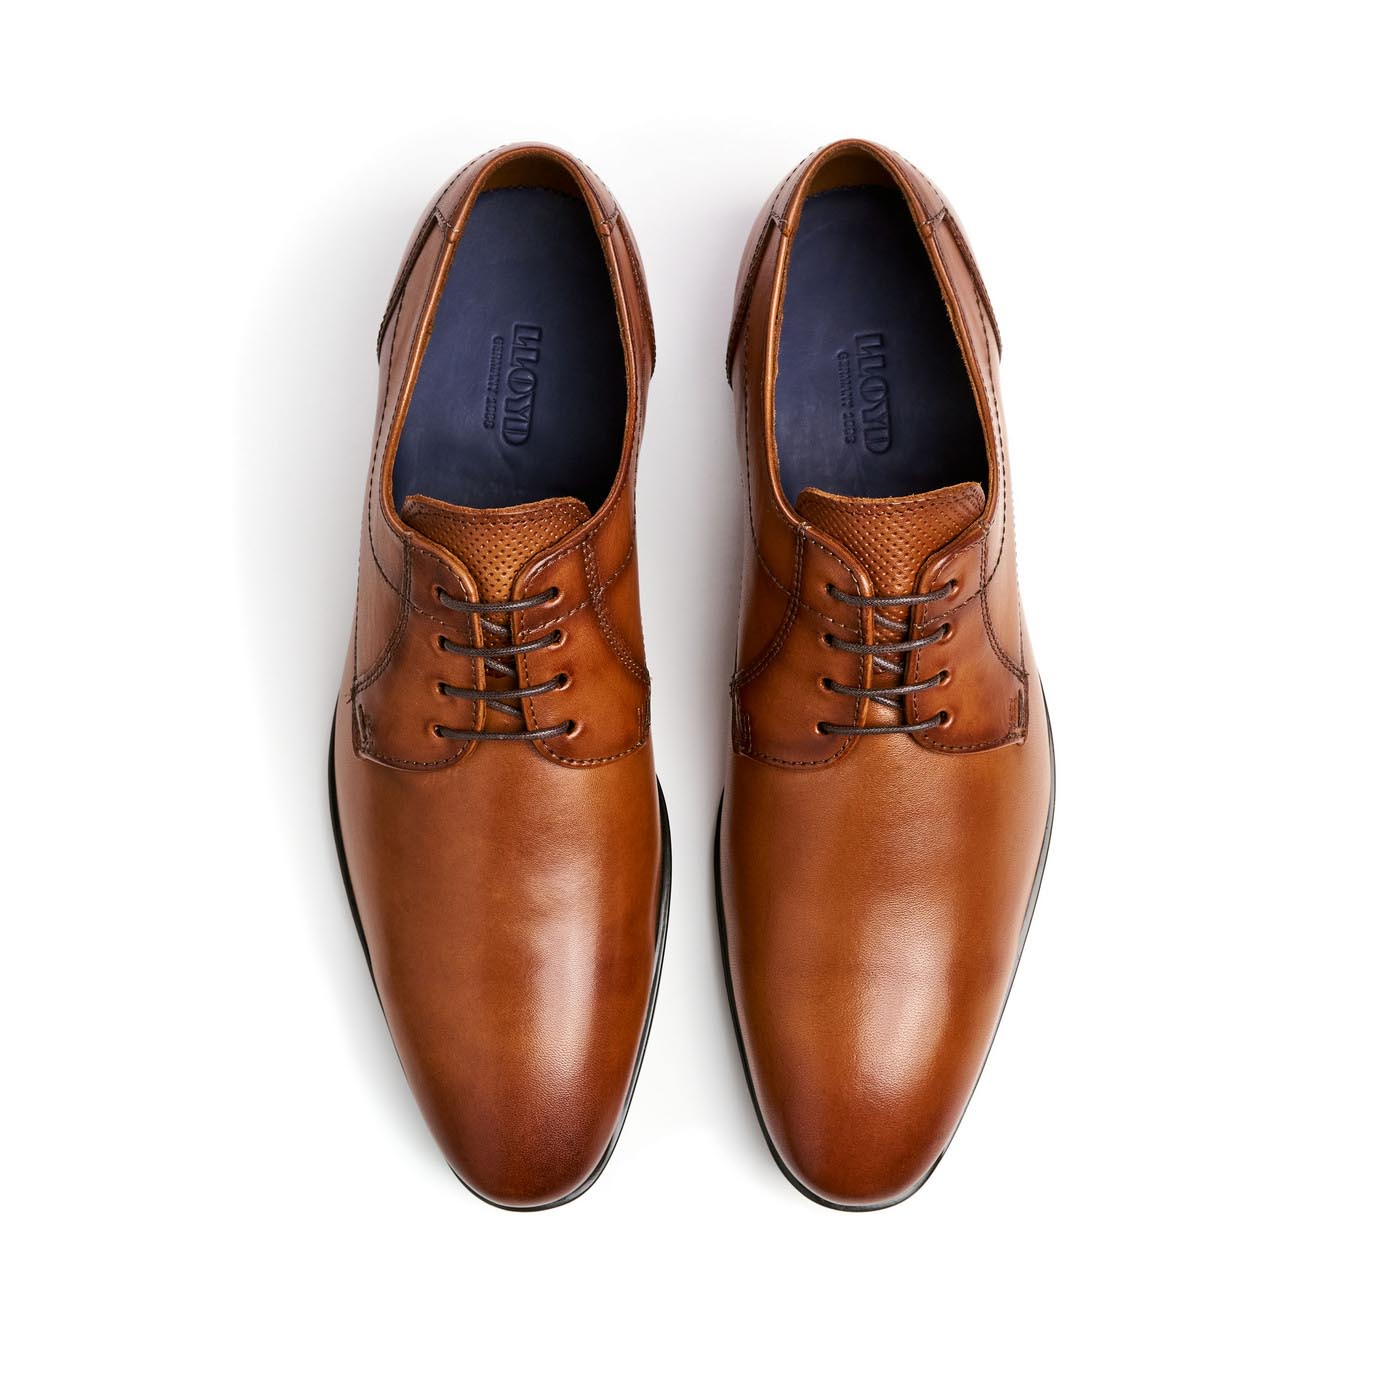 Main image of Men's Derby Shoes in Rich Cognac by Lloyd.